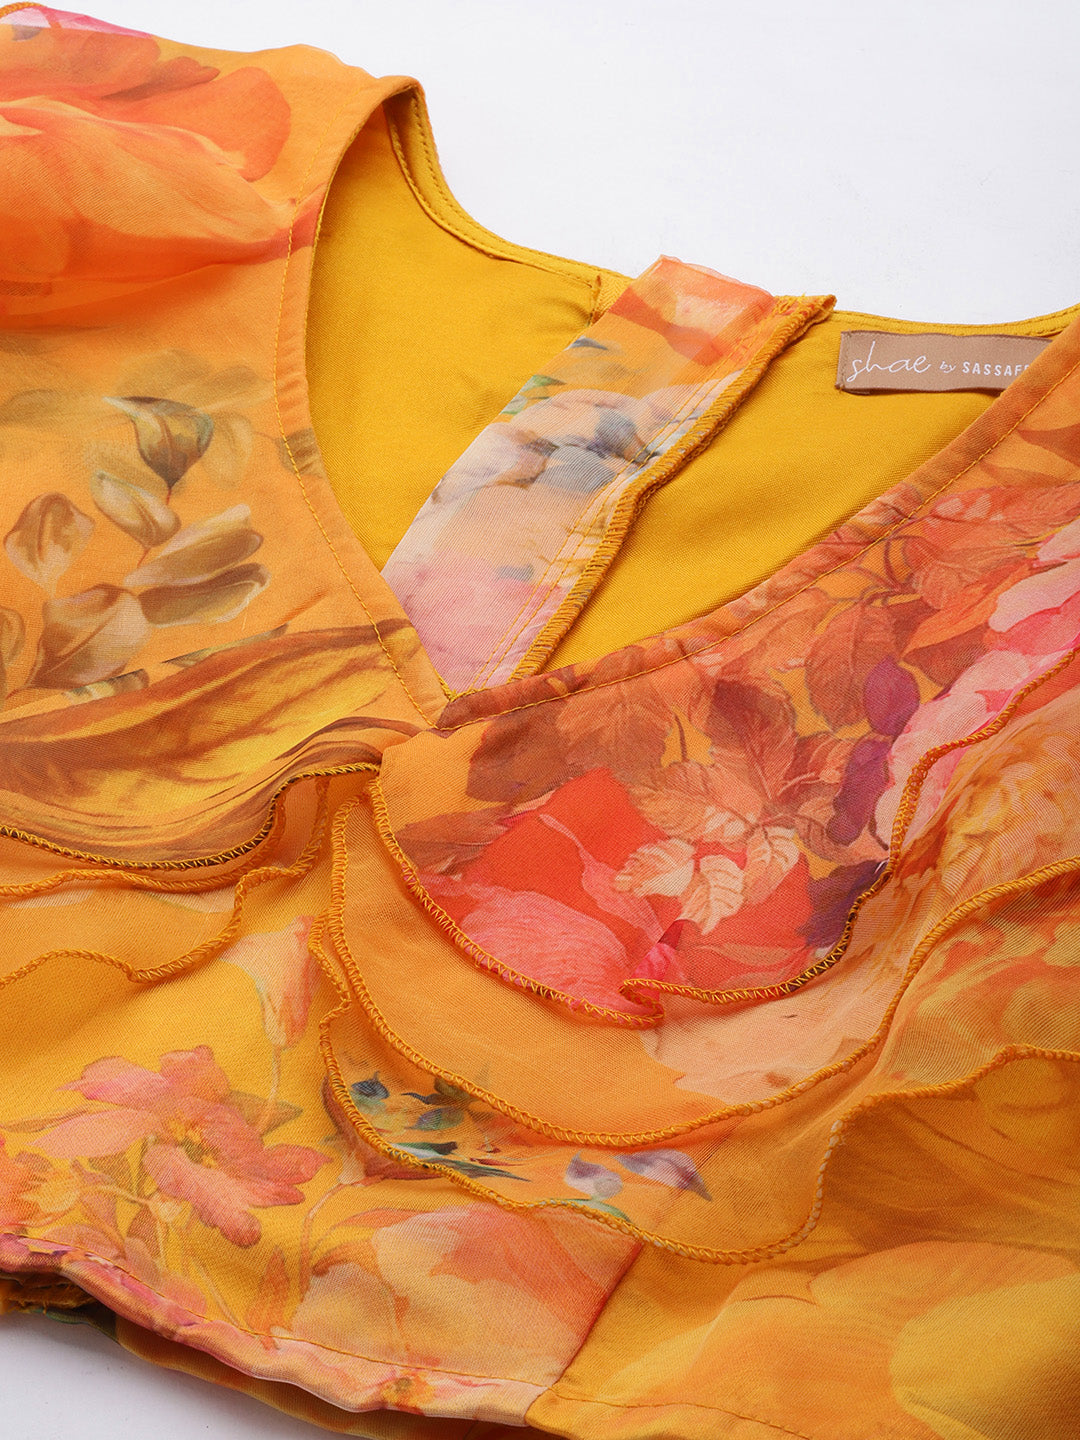 Women Yellow Organza Floral Crop Top With Anarkali Skirt